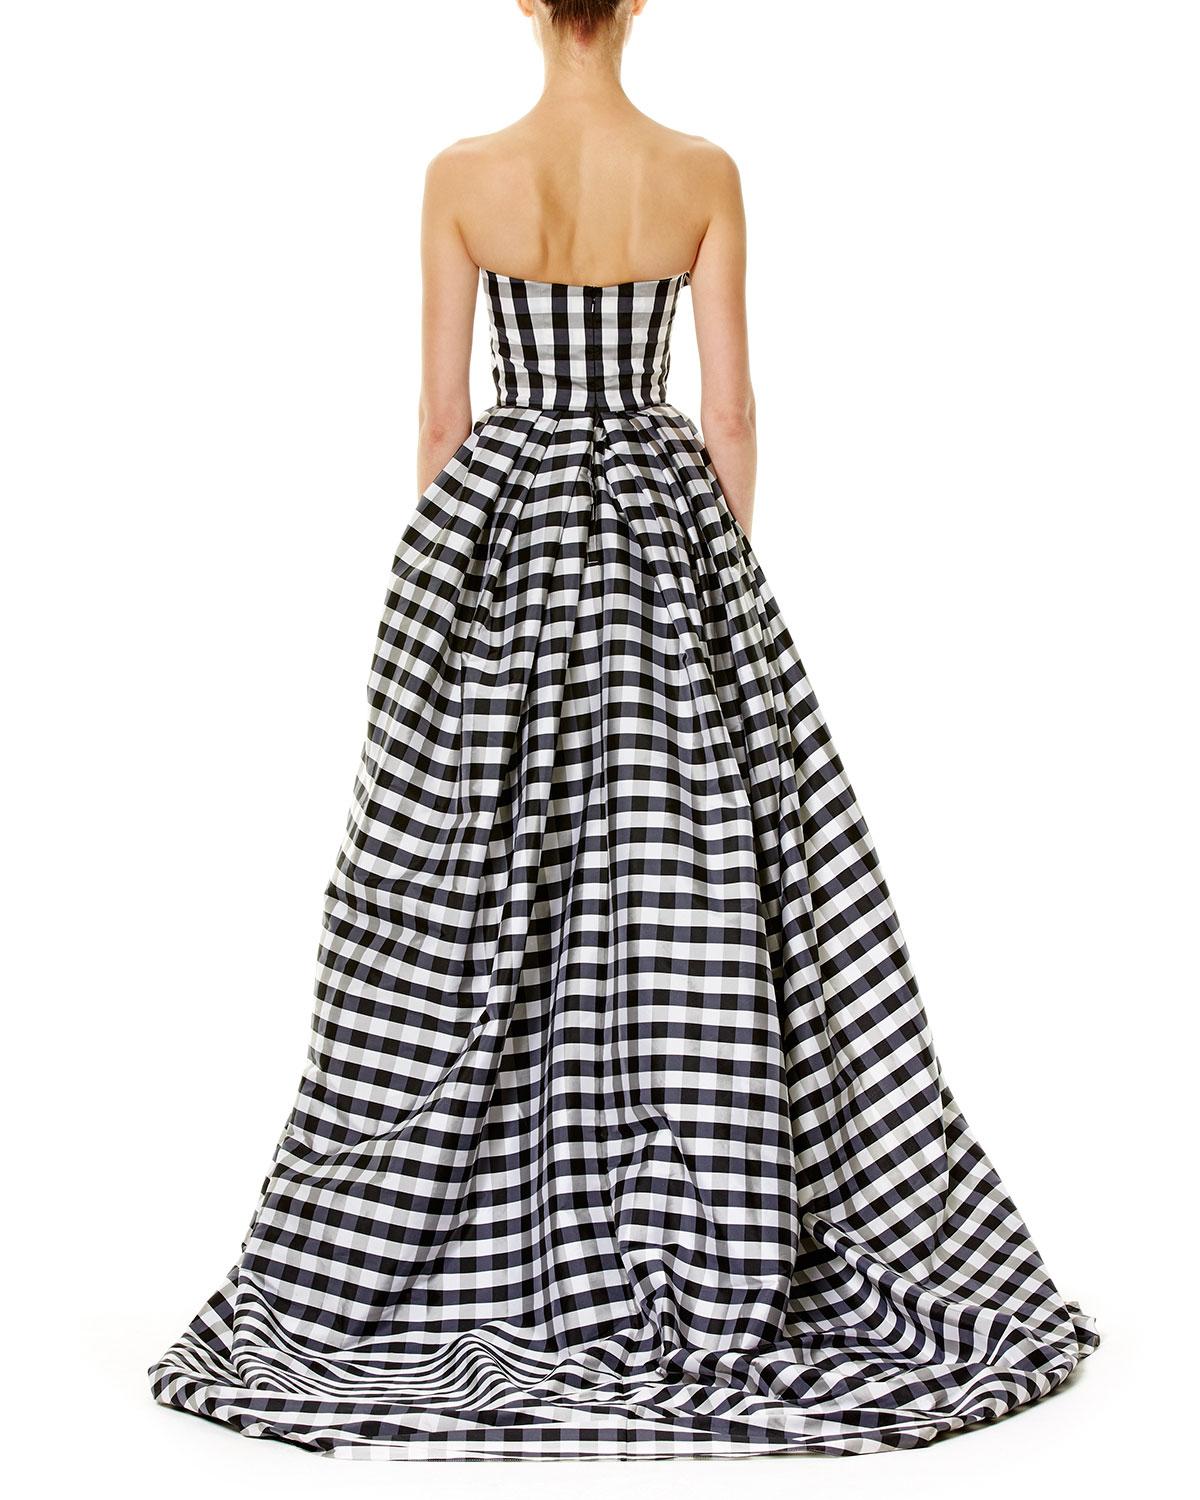 tesco leopard print dress